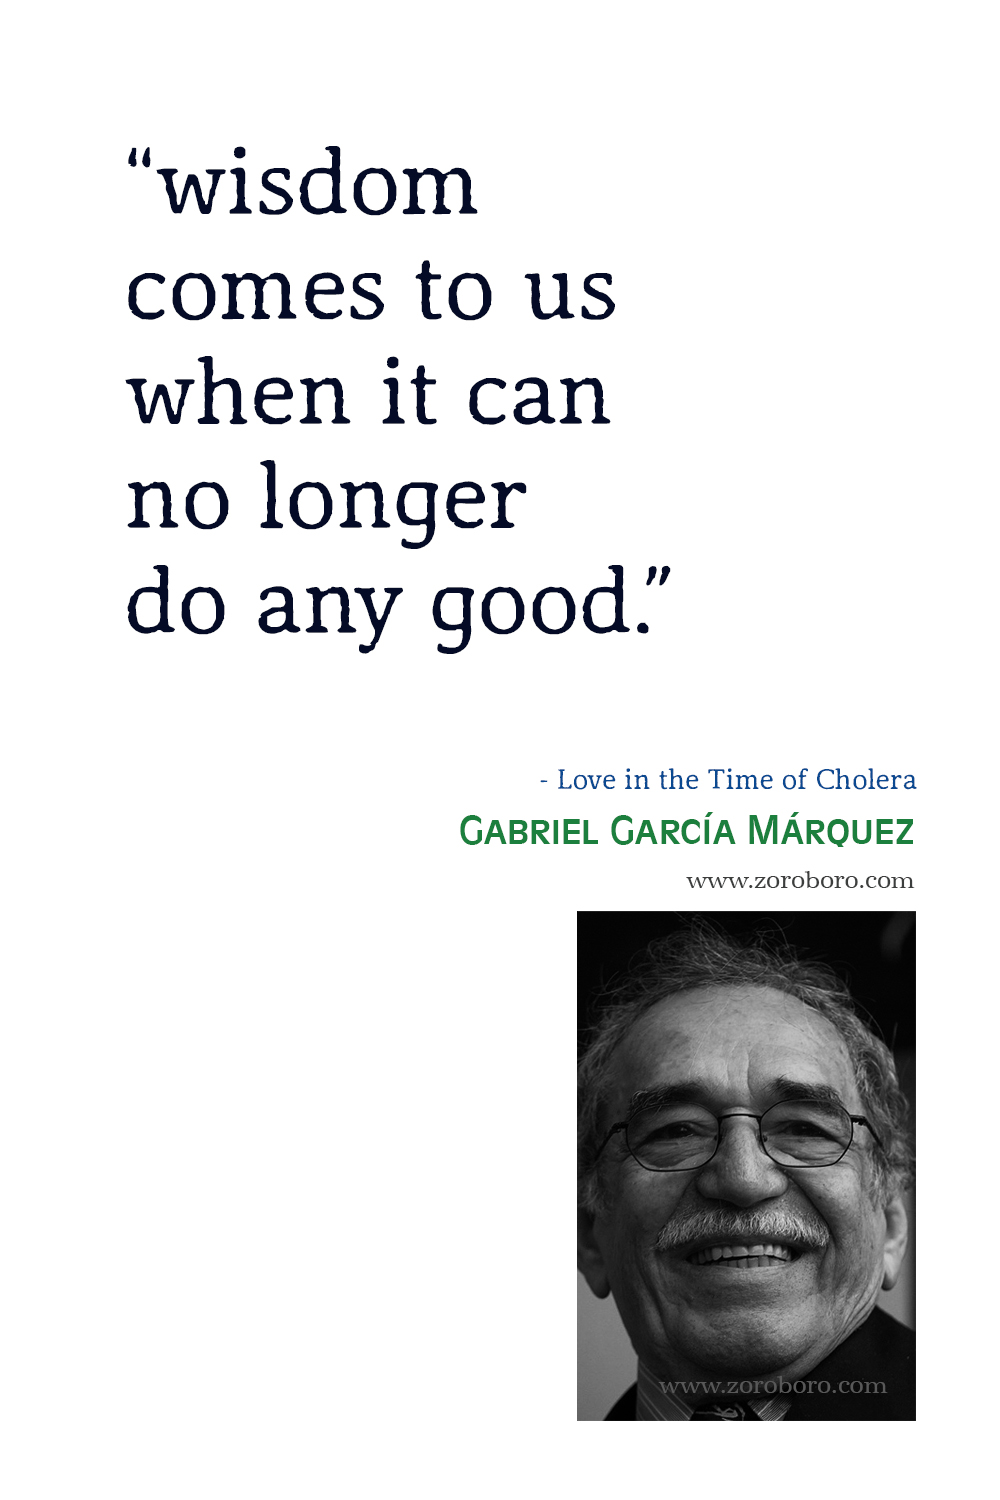 Gabriel García Márquez Quotes, Gabriel Garcia Marquez One Hundred Years of Solitude, Gabriel Garcia Marquez Books, Gabriel Garcia Marquez Giving, Heart, Love, Memories, Reality, Solitude Quotes